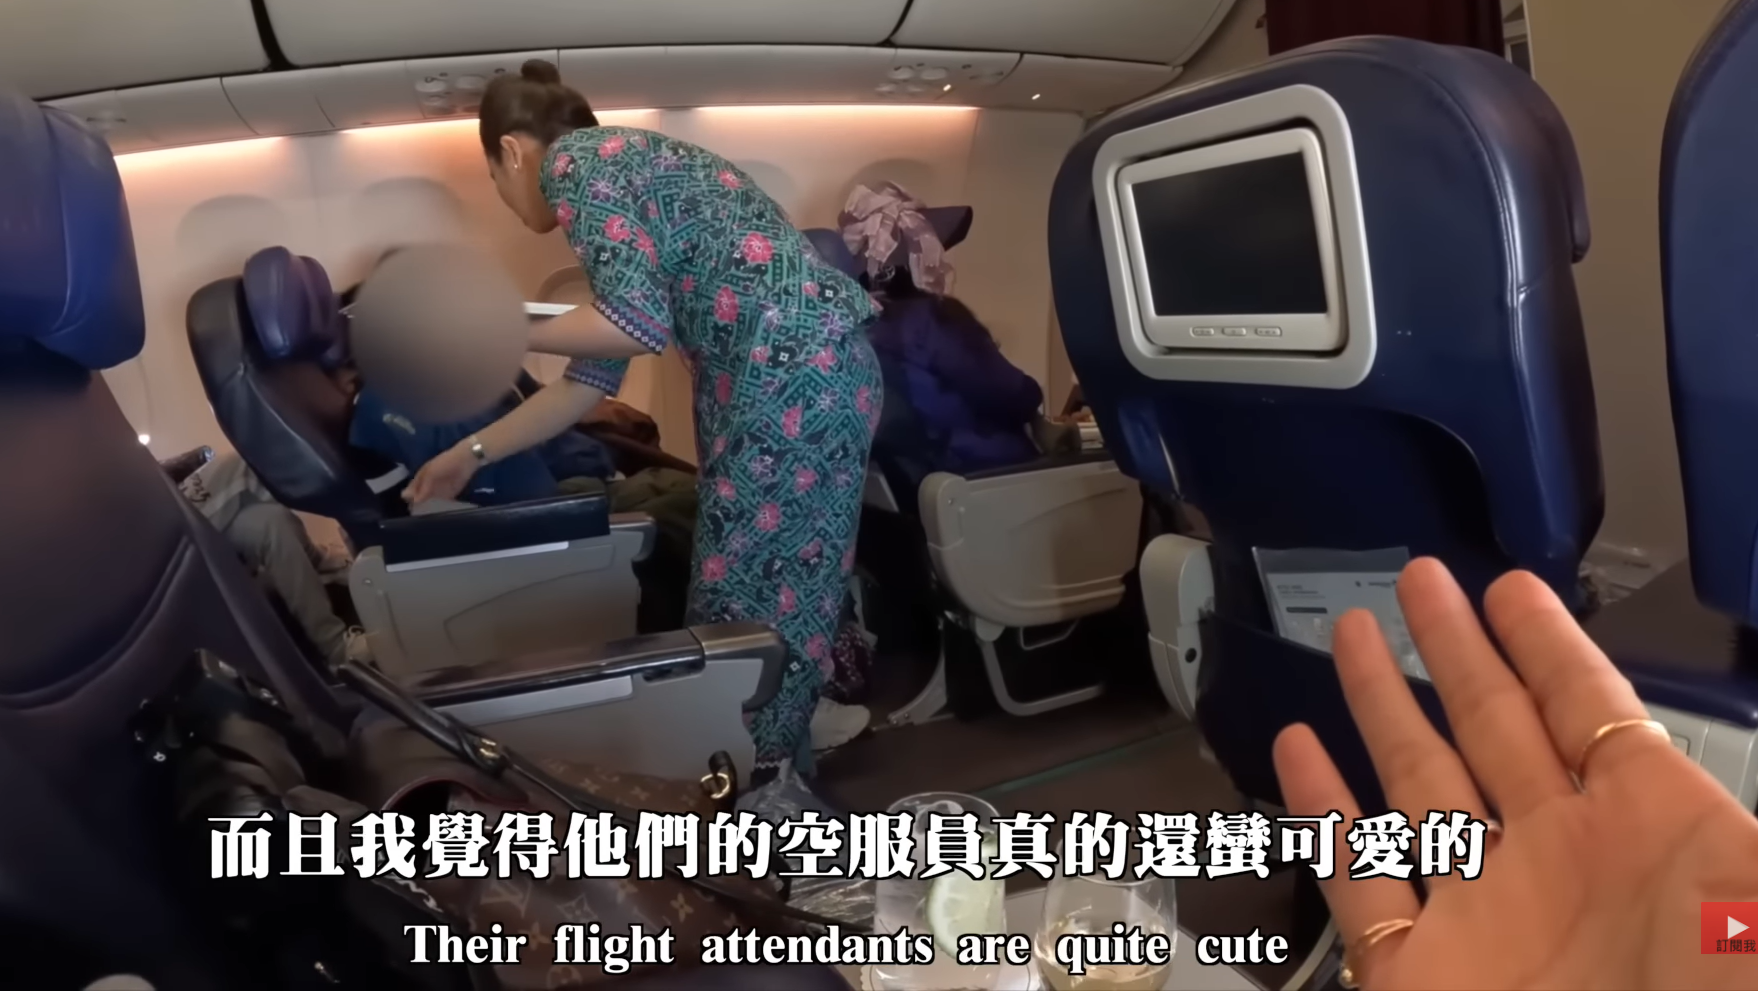 Taiwan influencer gives mas airline’s business class service 100% mark, praises friendly staff | weirdkaya